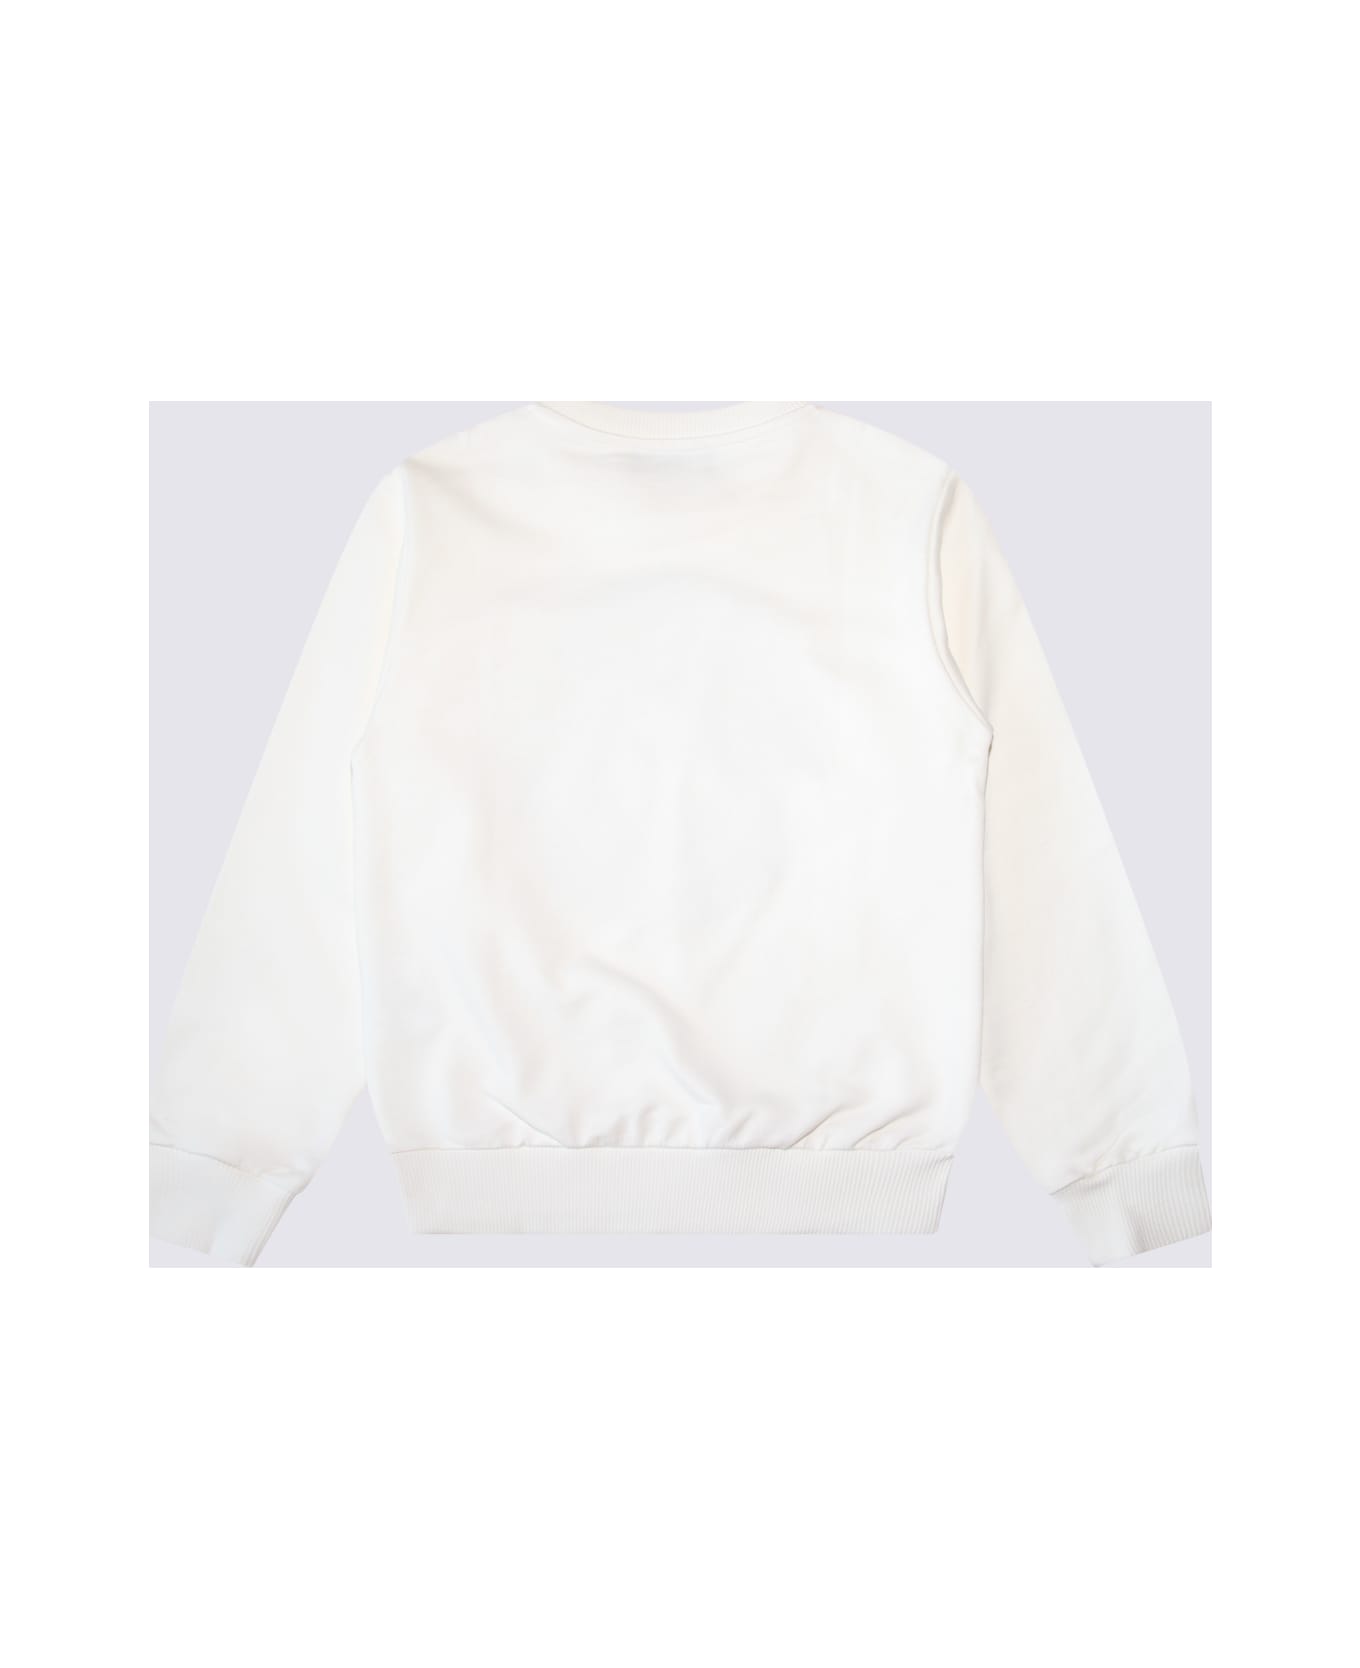 Versace White Cotton Sweatshirt - MultiColour ニットウェア＆スウェットシャツ